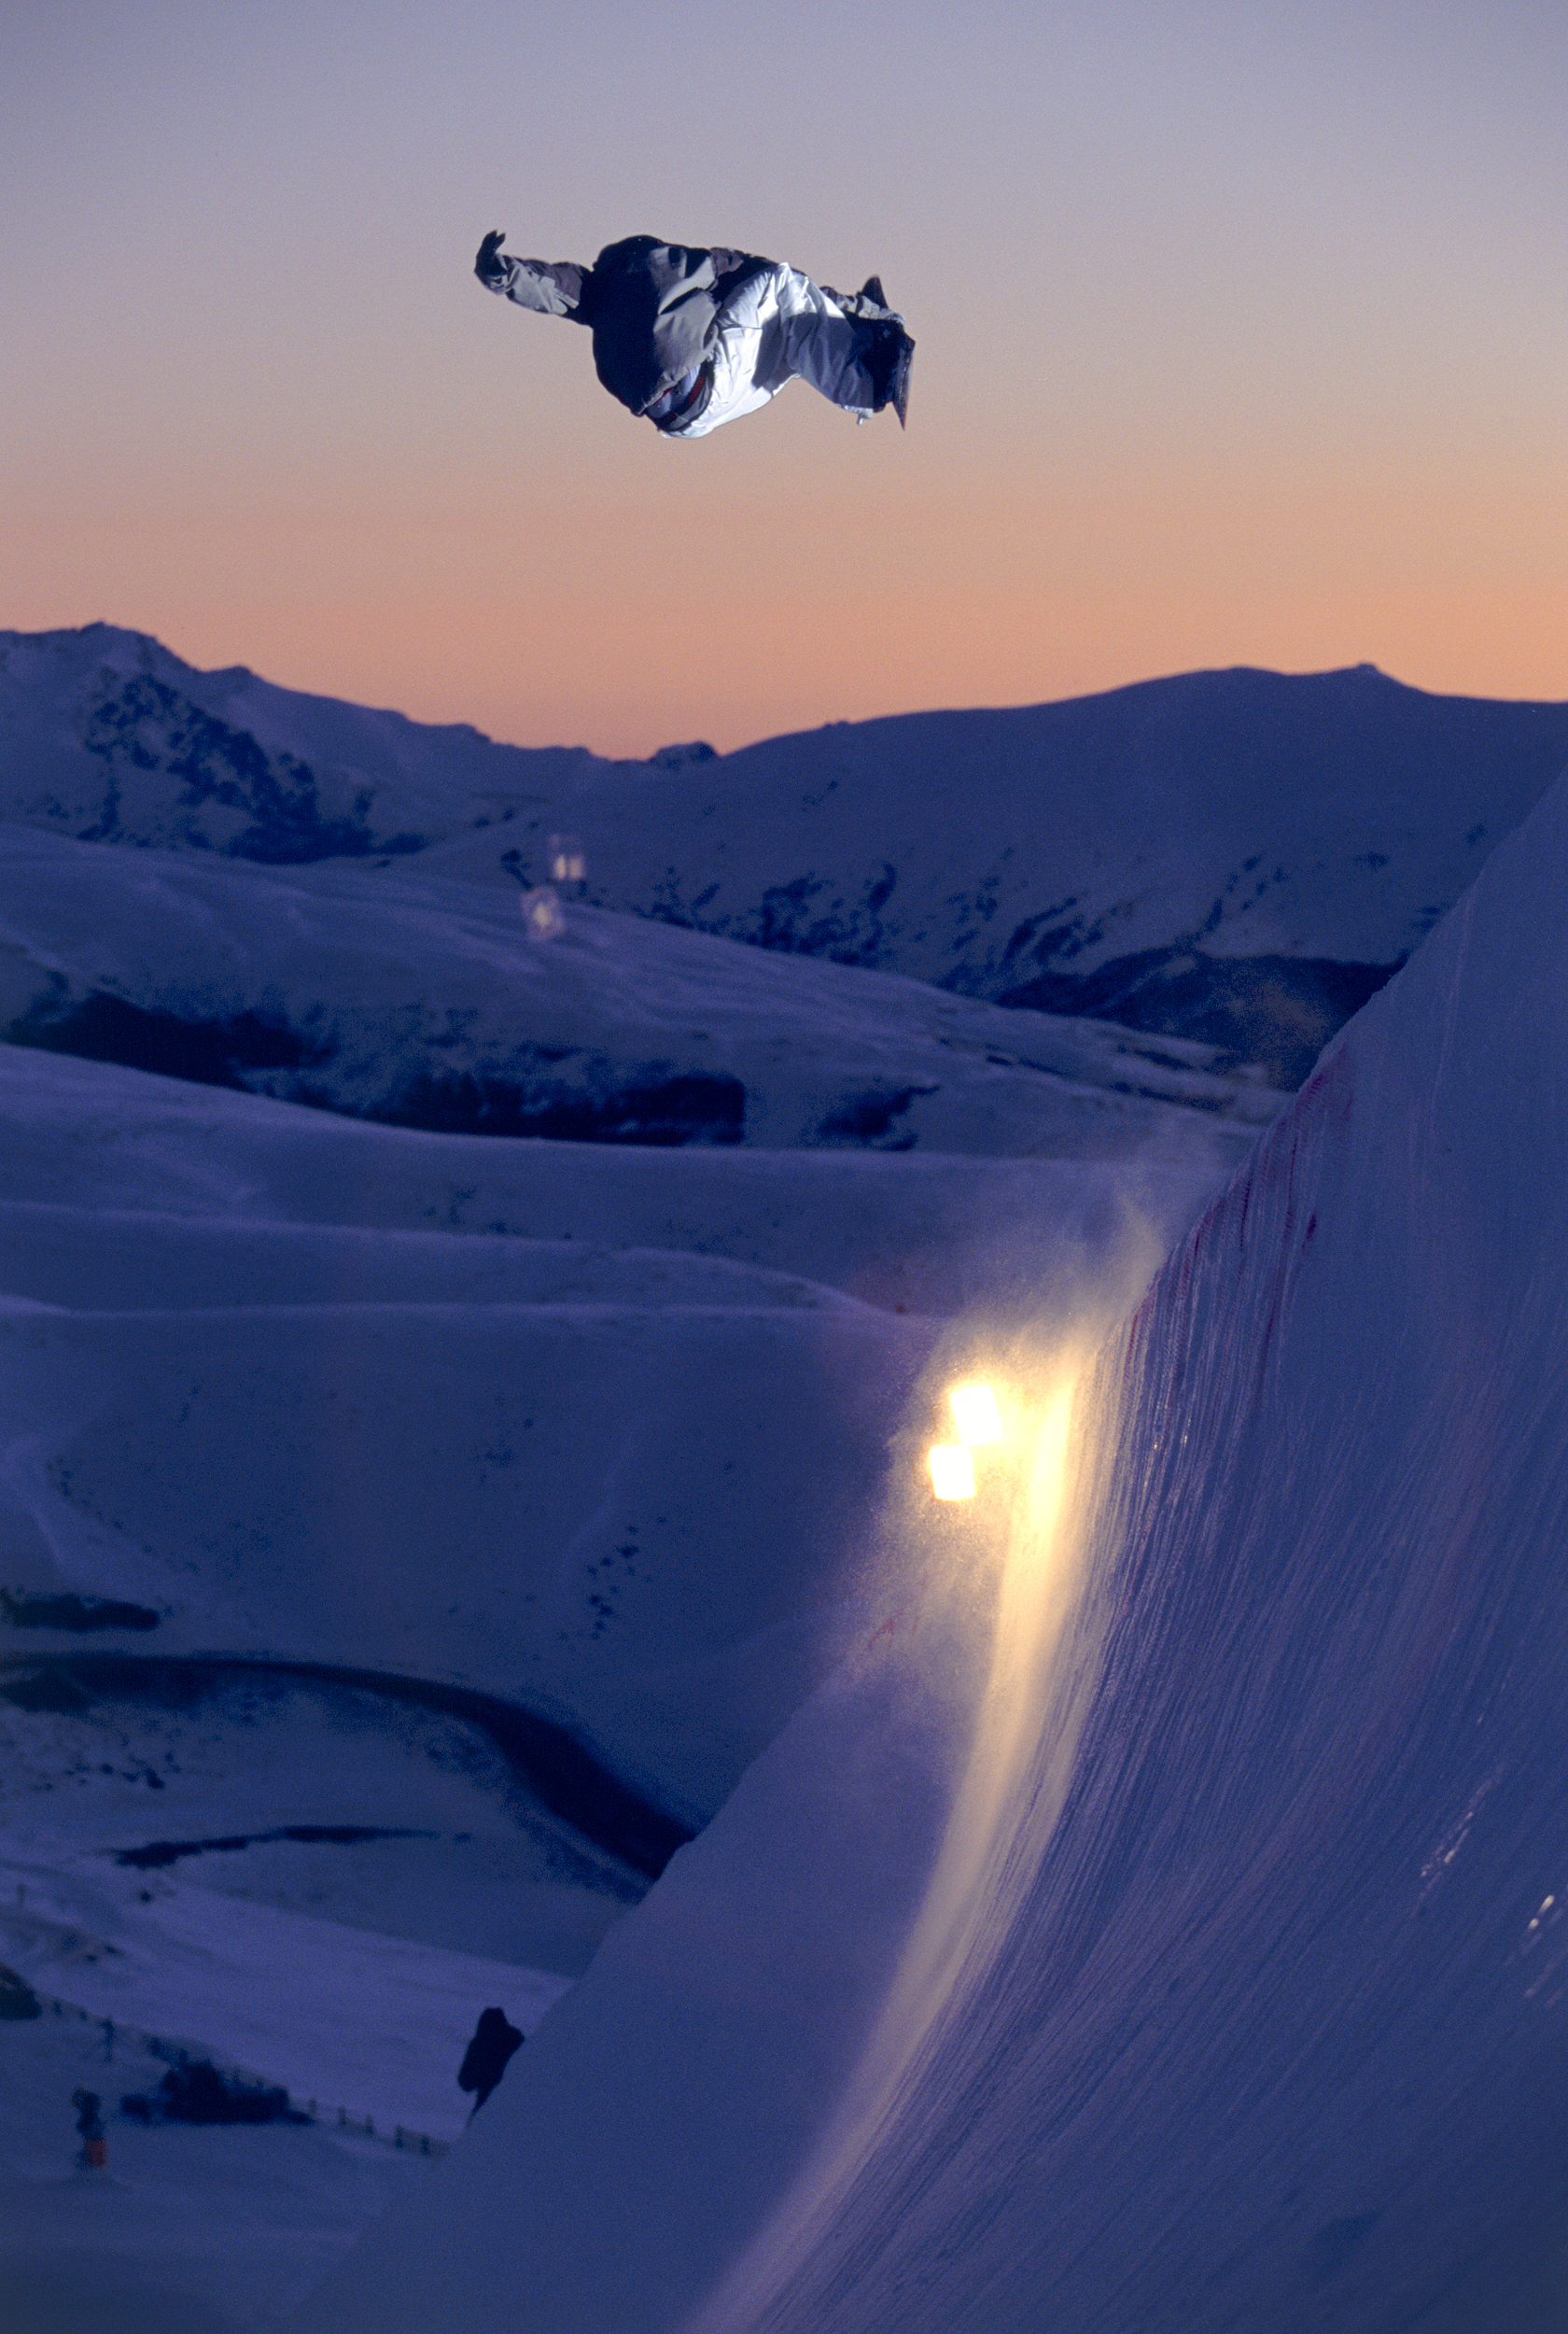 Elements photo gallery snowboarder magazine